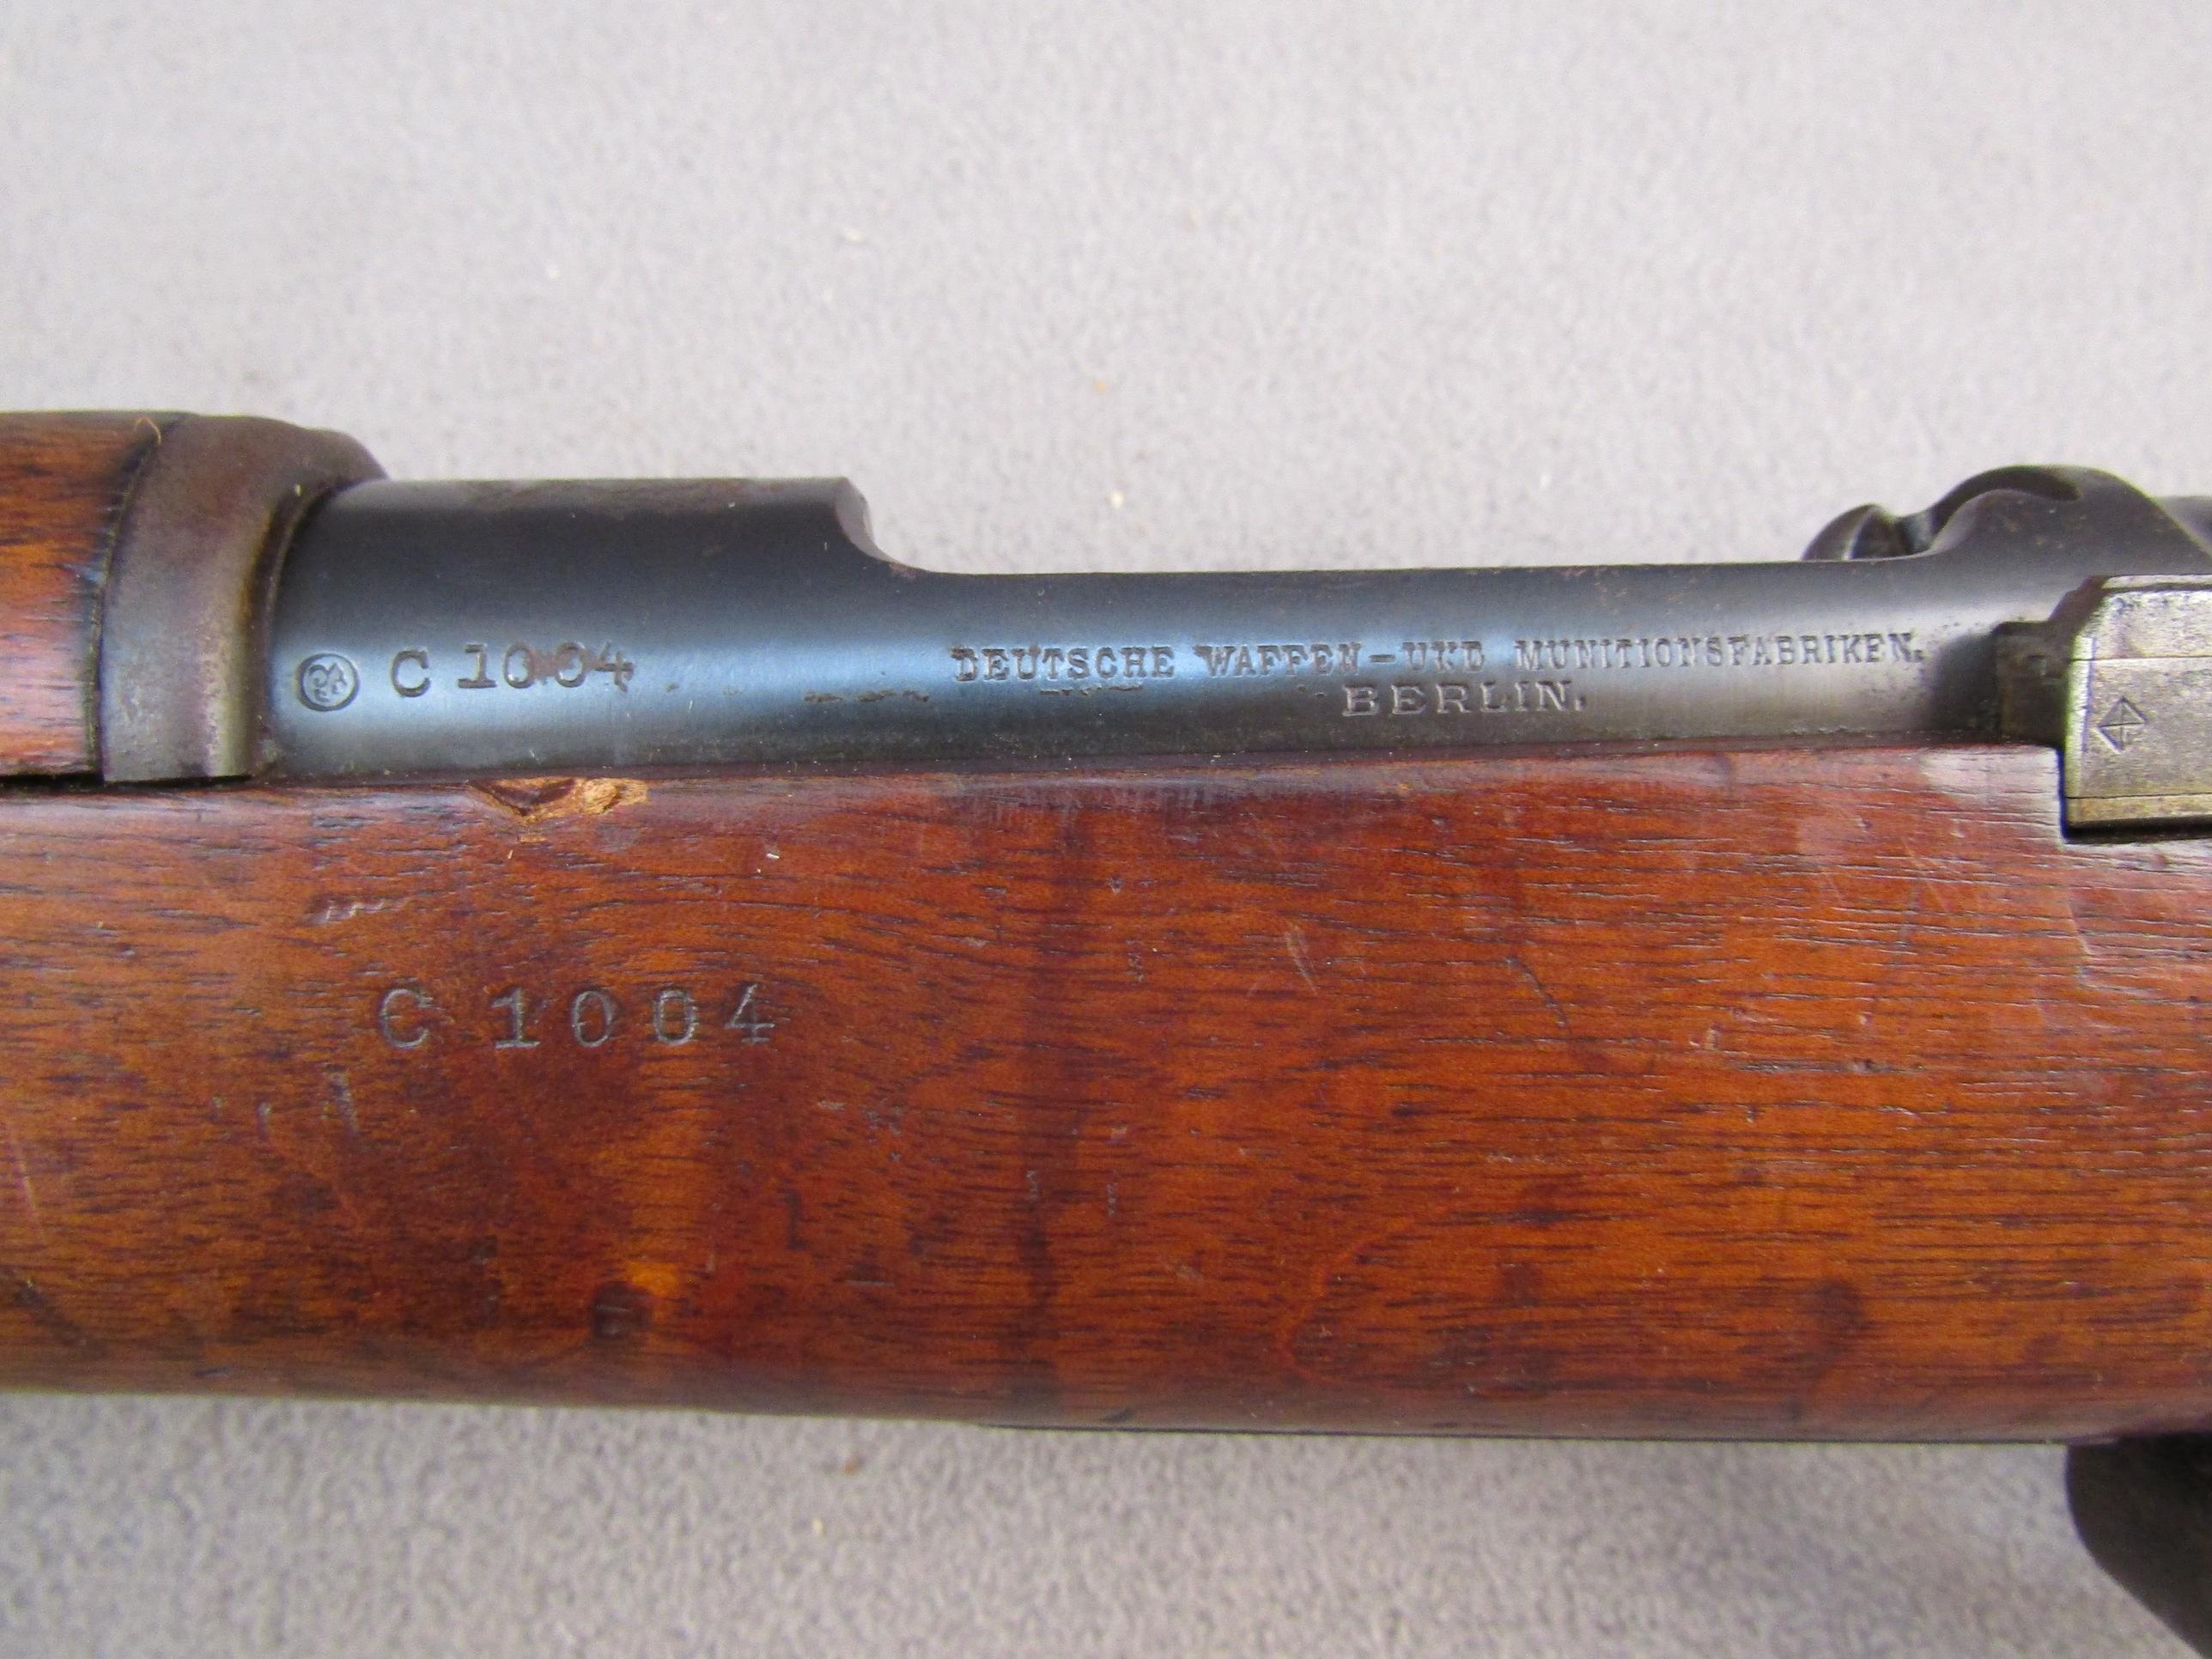 MAUSER Model 95, Bolt-Action Rifle, 7x57, S#C1004